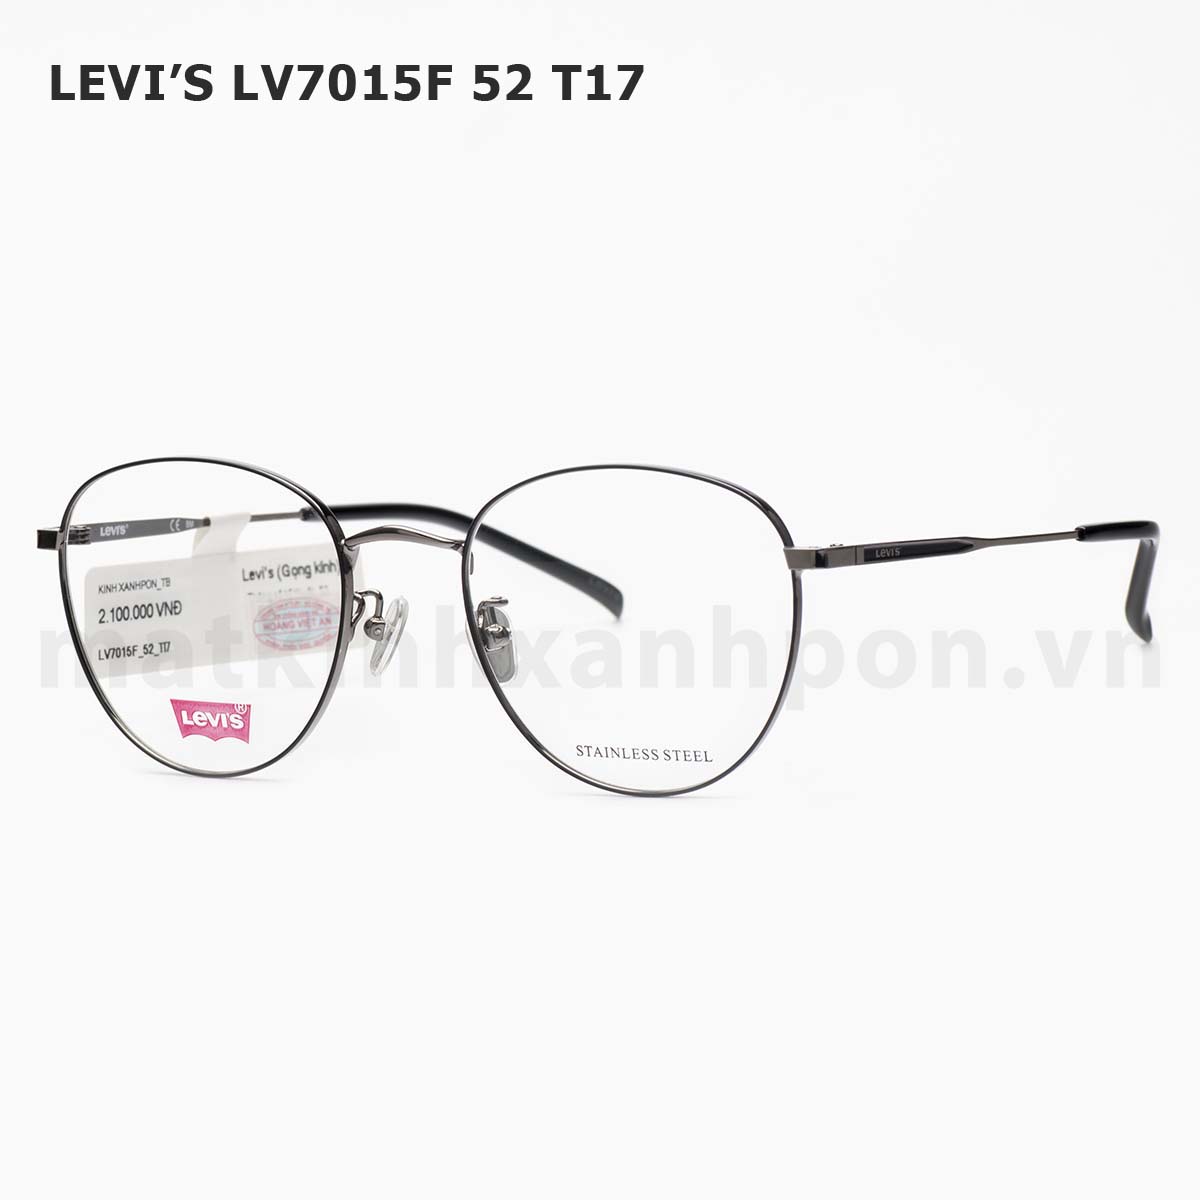 Levi’s LV7015F 52 T17